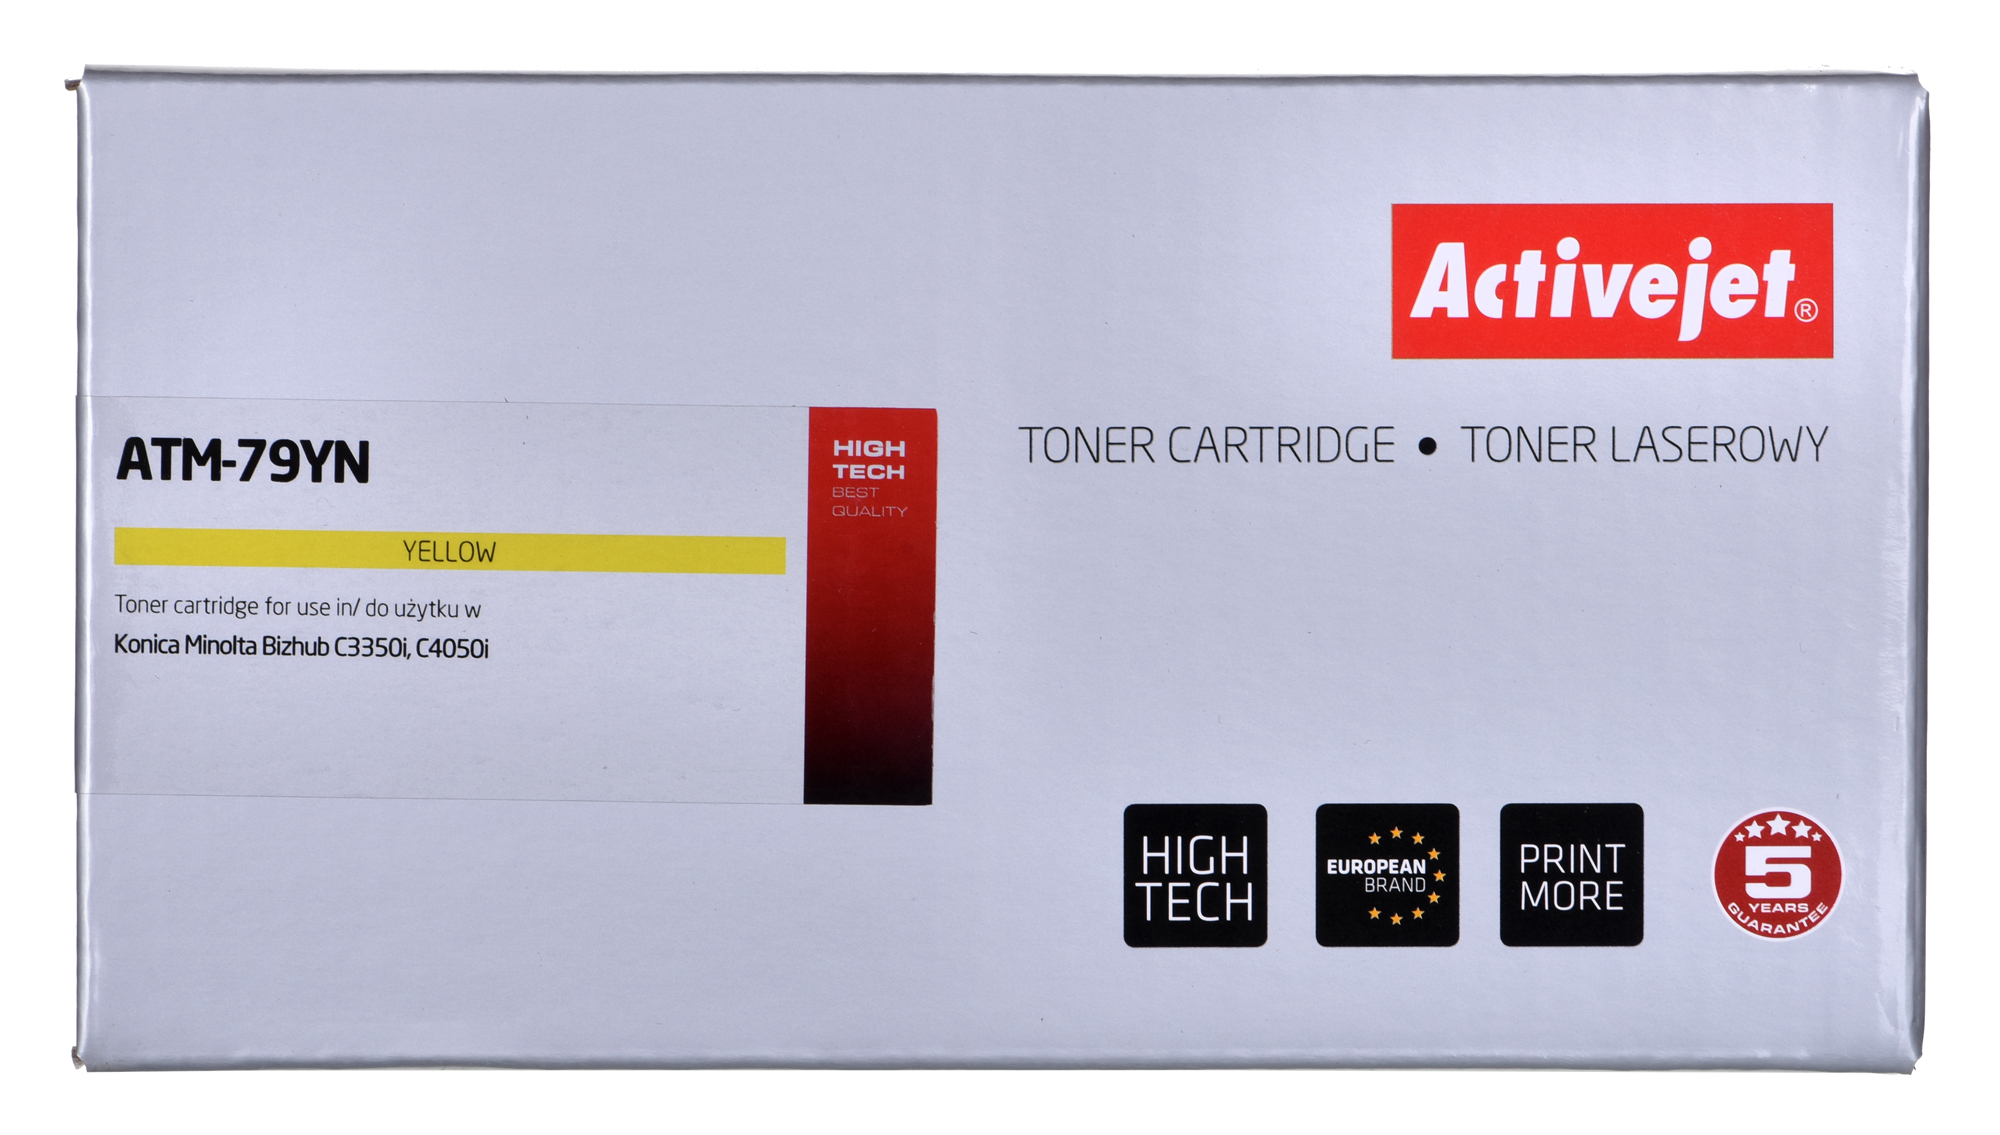 Toner Activejet ATM-79YN do drukarki Konica Minolta, zamiennik Konica Minolta TNP79Y; Supreme; 9000 stron; żółty.